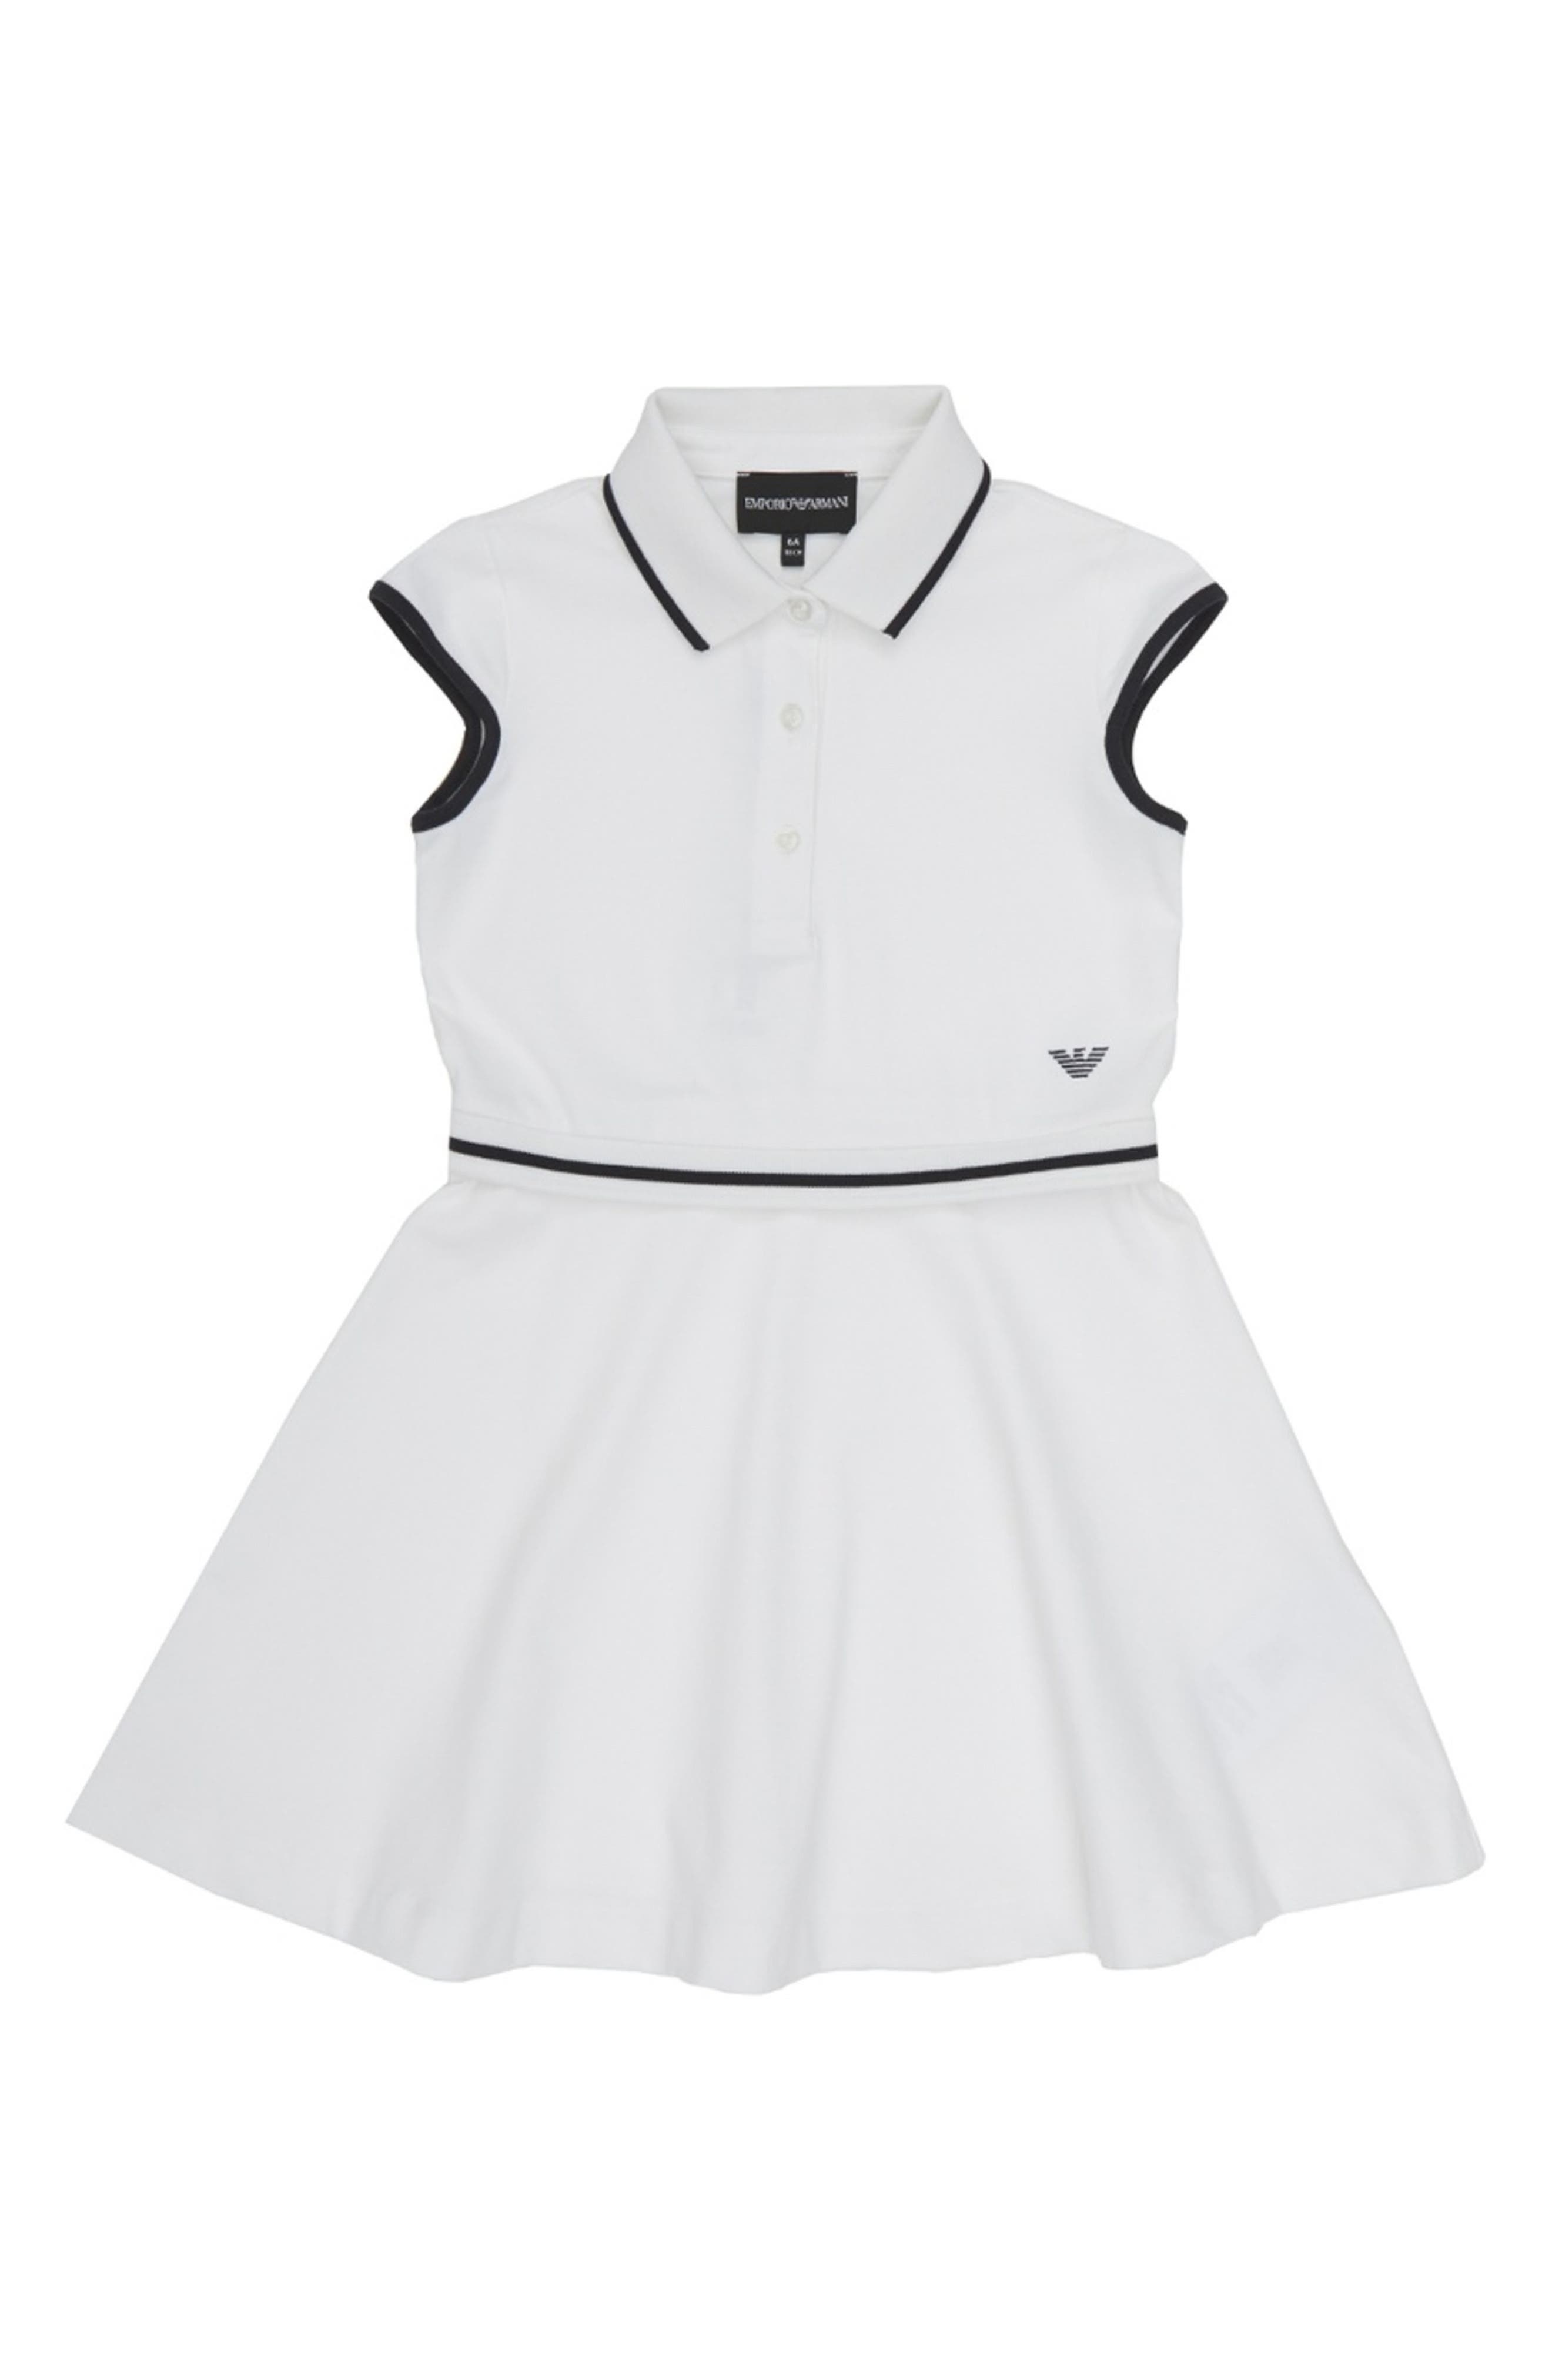 armani tennis clothing